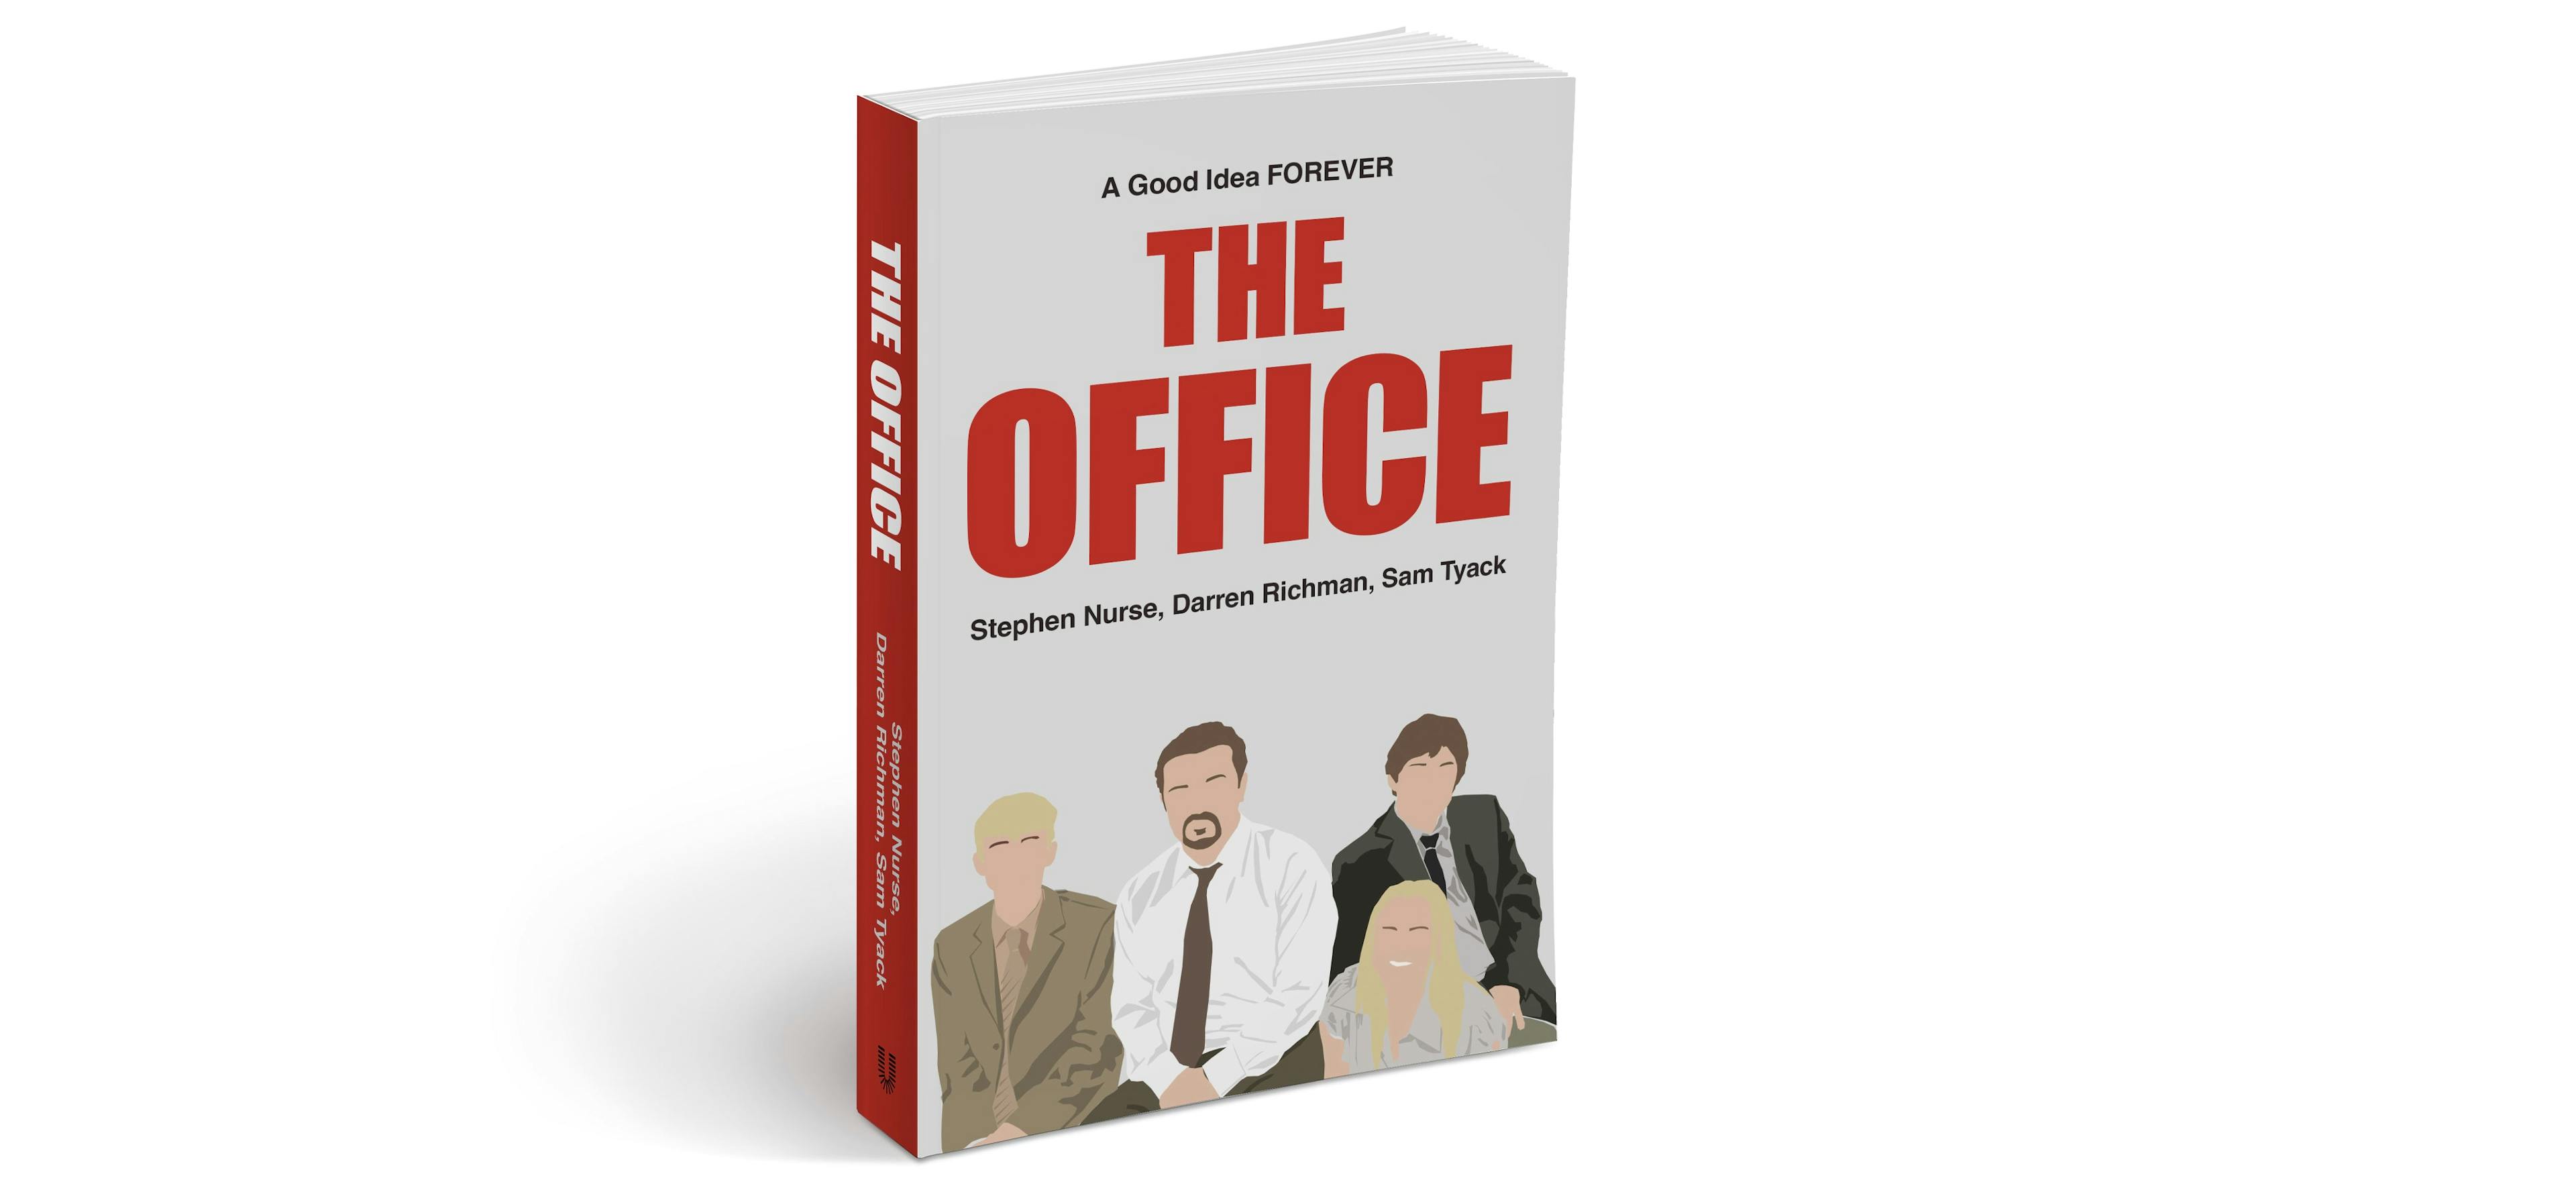 The Office by Stephen Nurse, Darren Richman, Sam Tyack